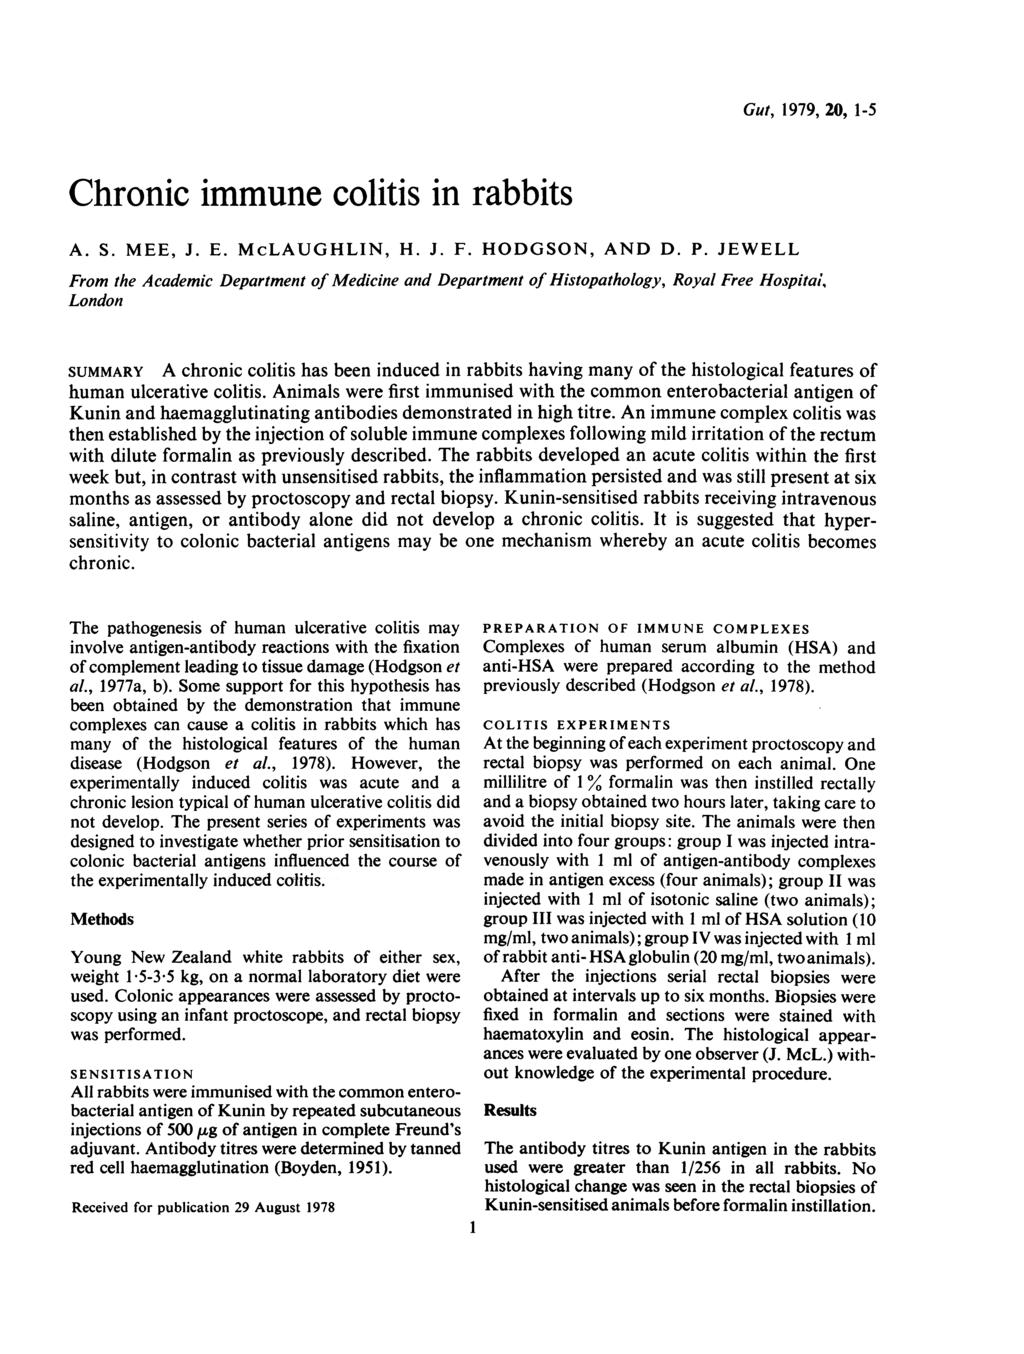 Chronic immune colitis in rabbits A. S. MEE, J. E. McLAUGHLIN, H. J. F. HODGSON, AND D. P.